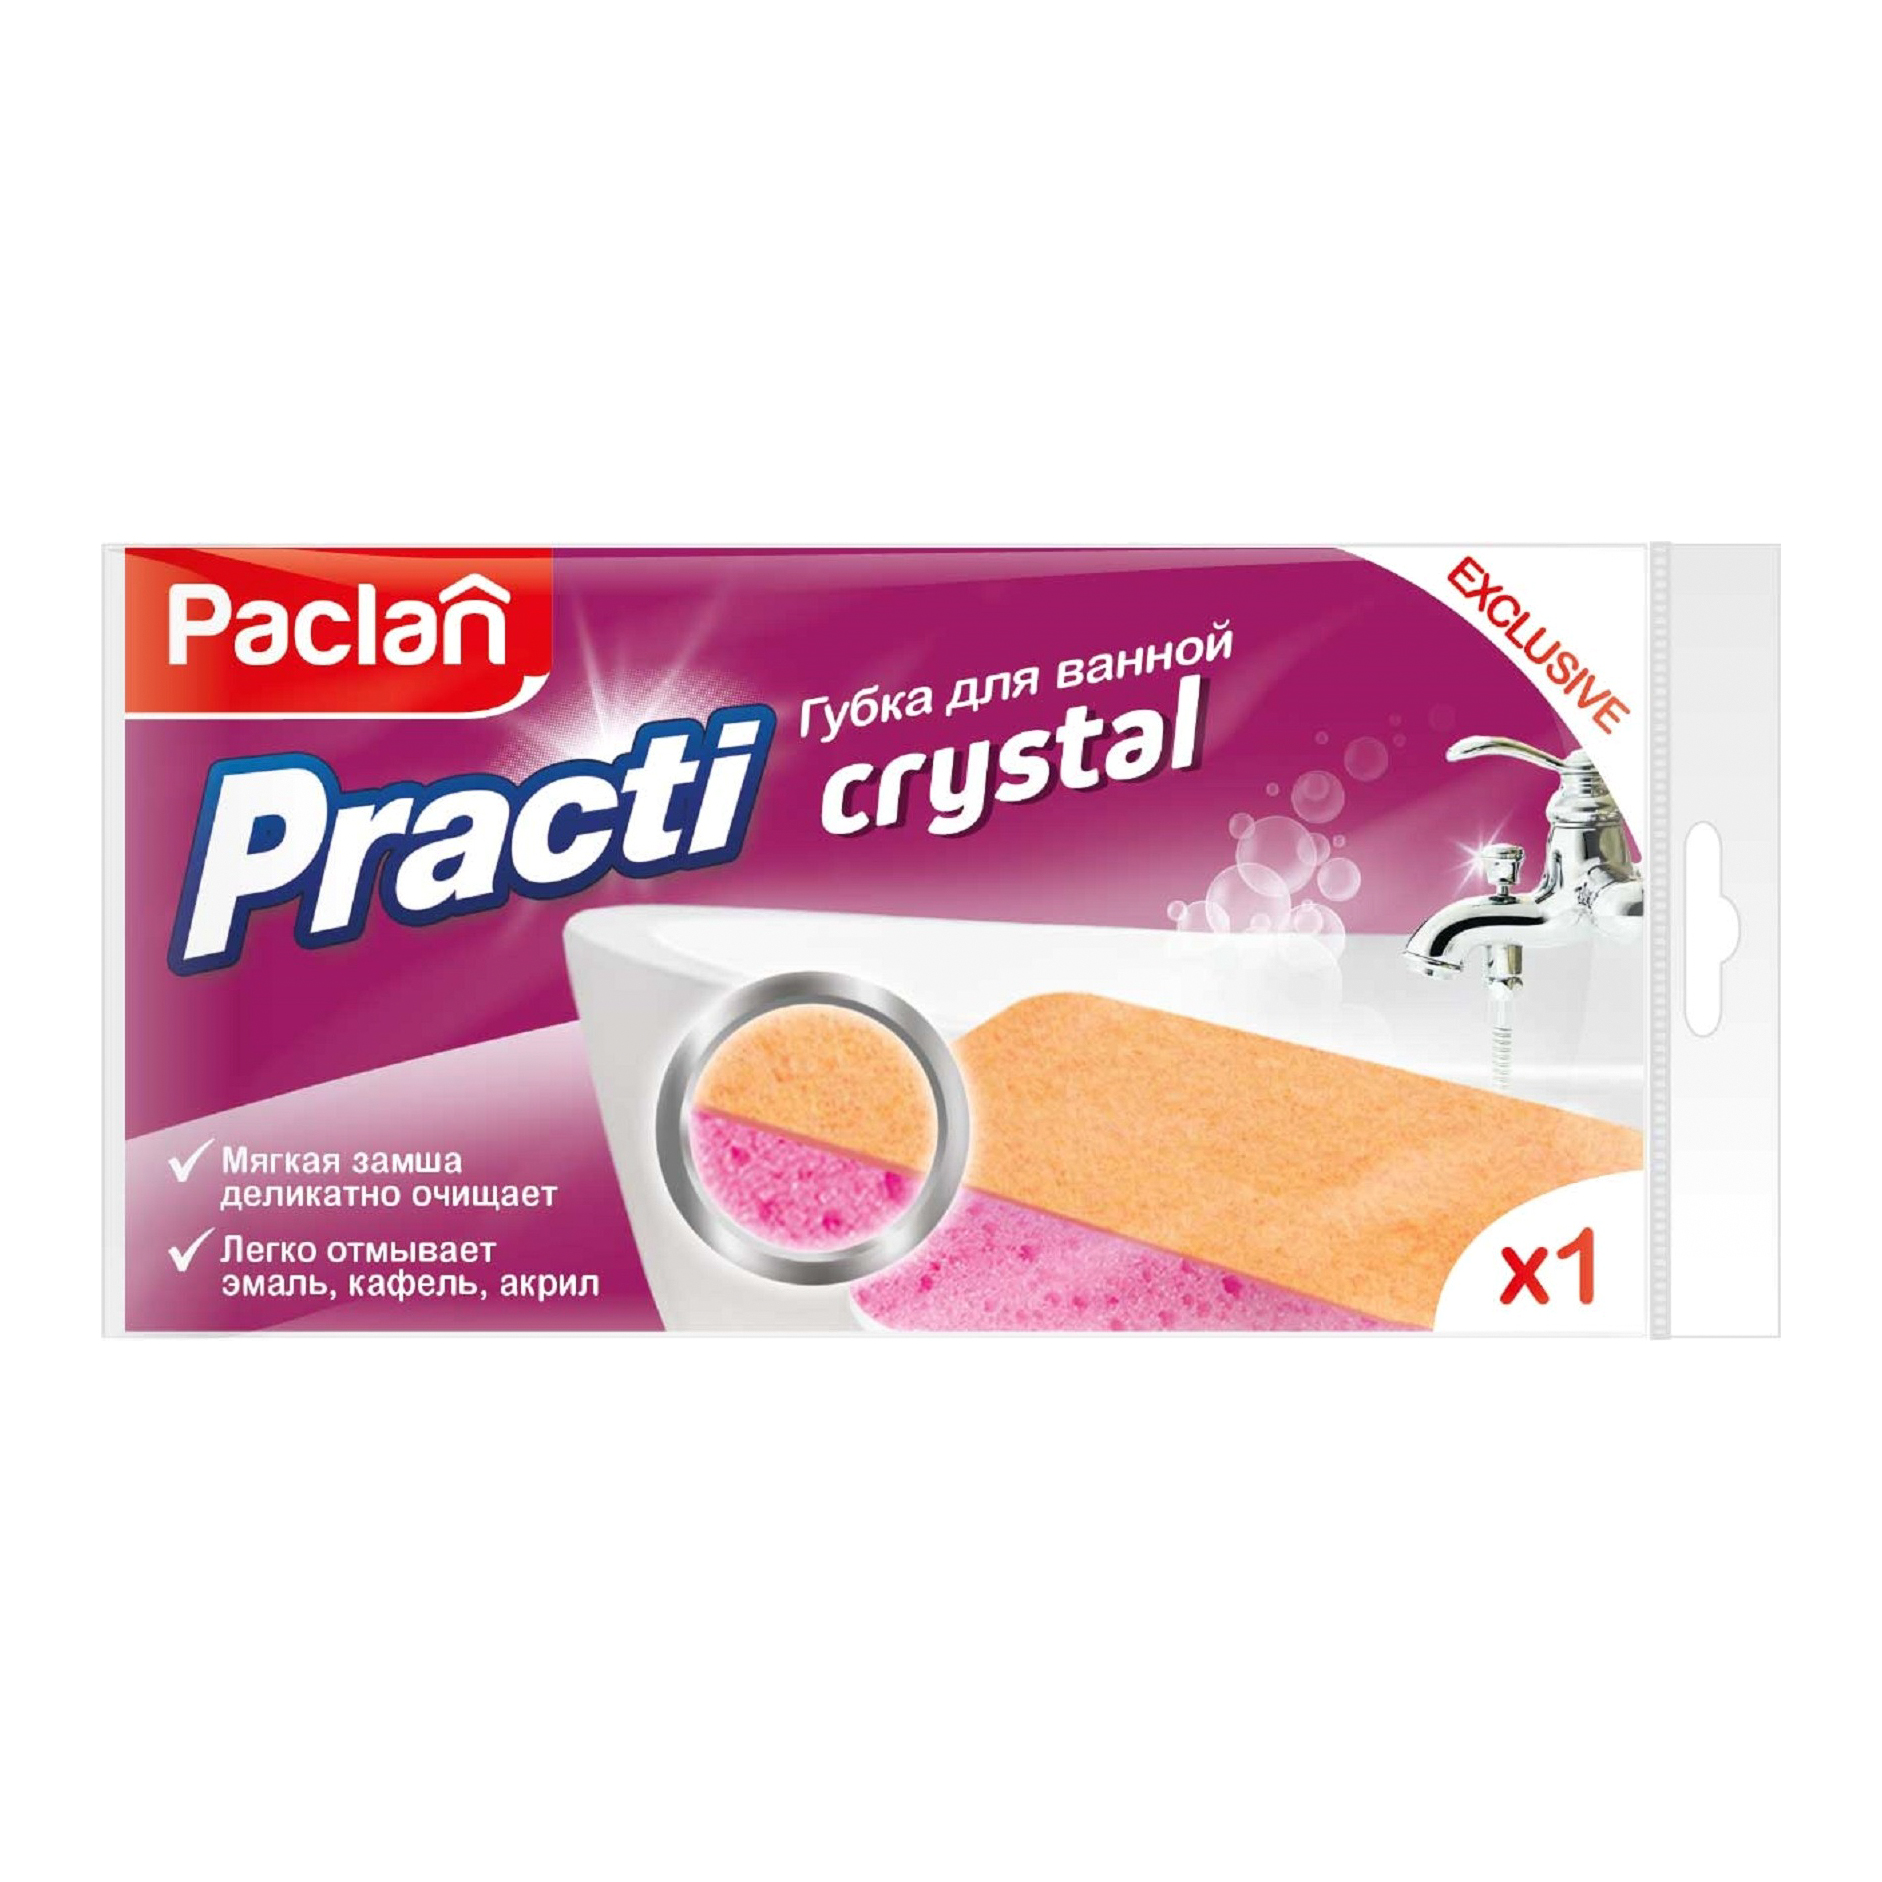 Губка для ванной Paclan Practi Crystal целлюлозная губка для ванной york